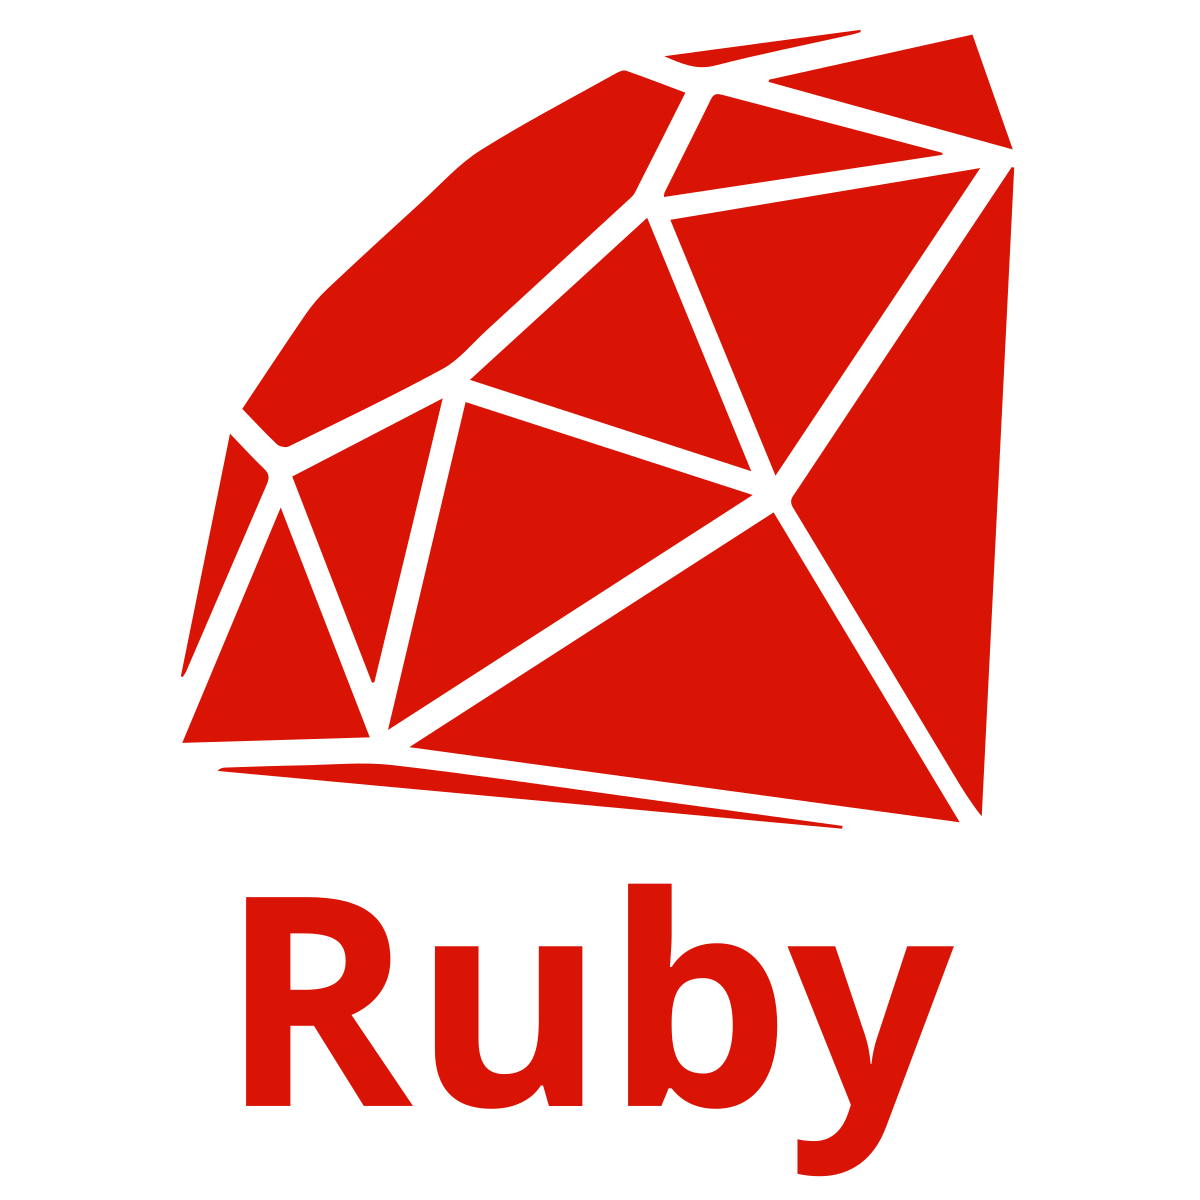 Ruby. Иконка Ruby. Рубин язык программирования. Иконка Ruby язык программирования.